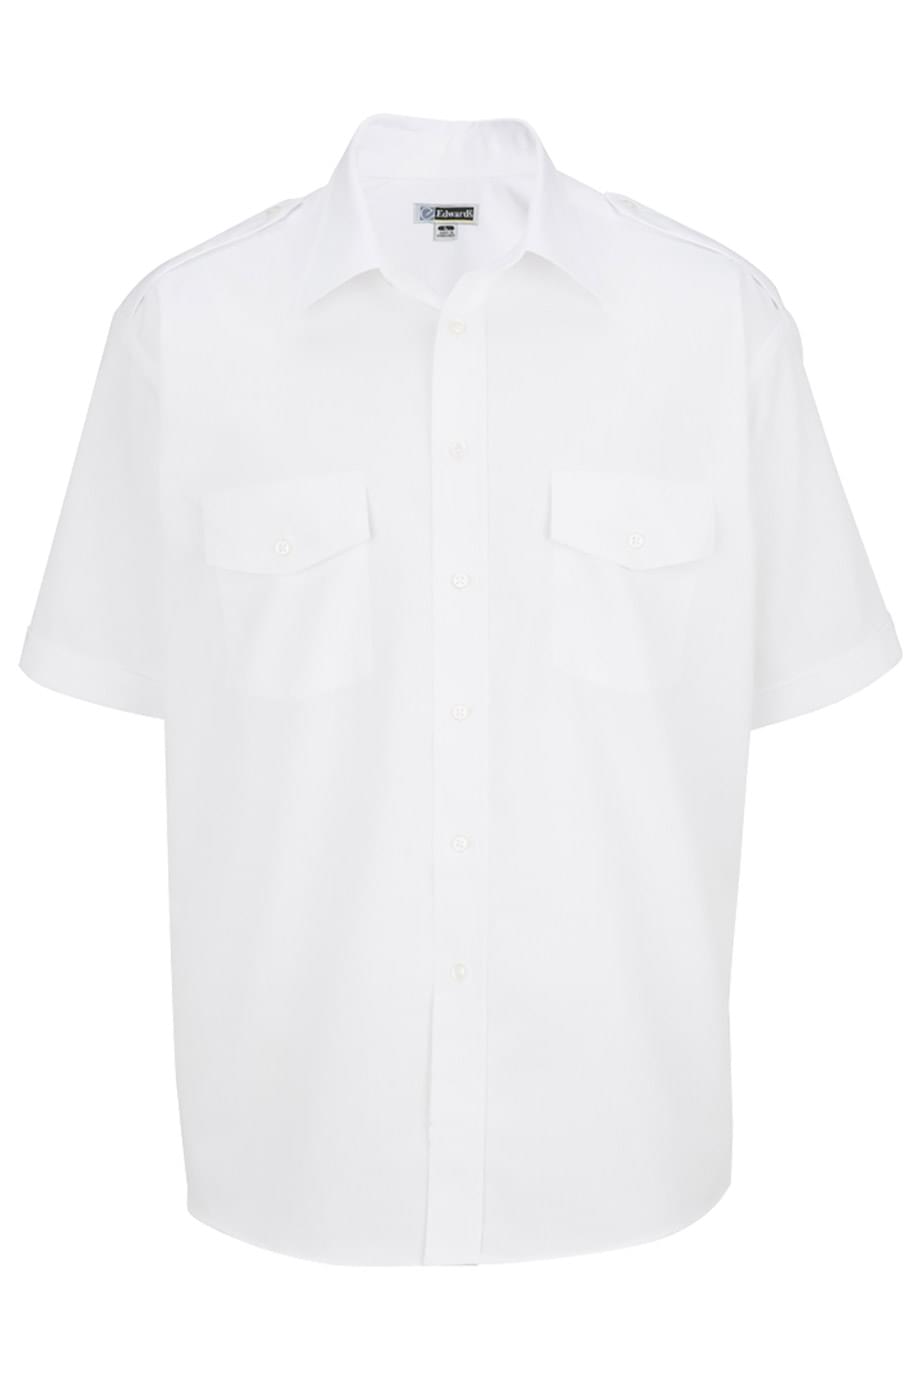 Edwards 1212  Mens Short Sleeve Navigator Shirt - Size 2XL